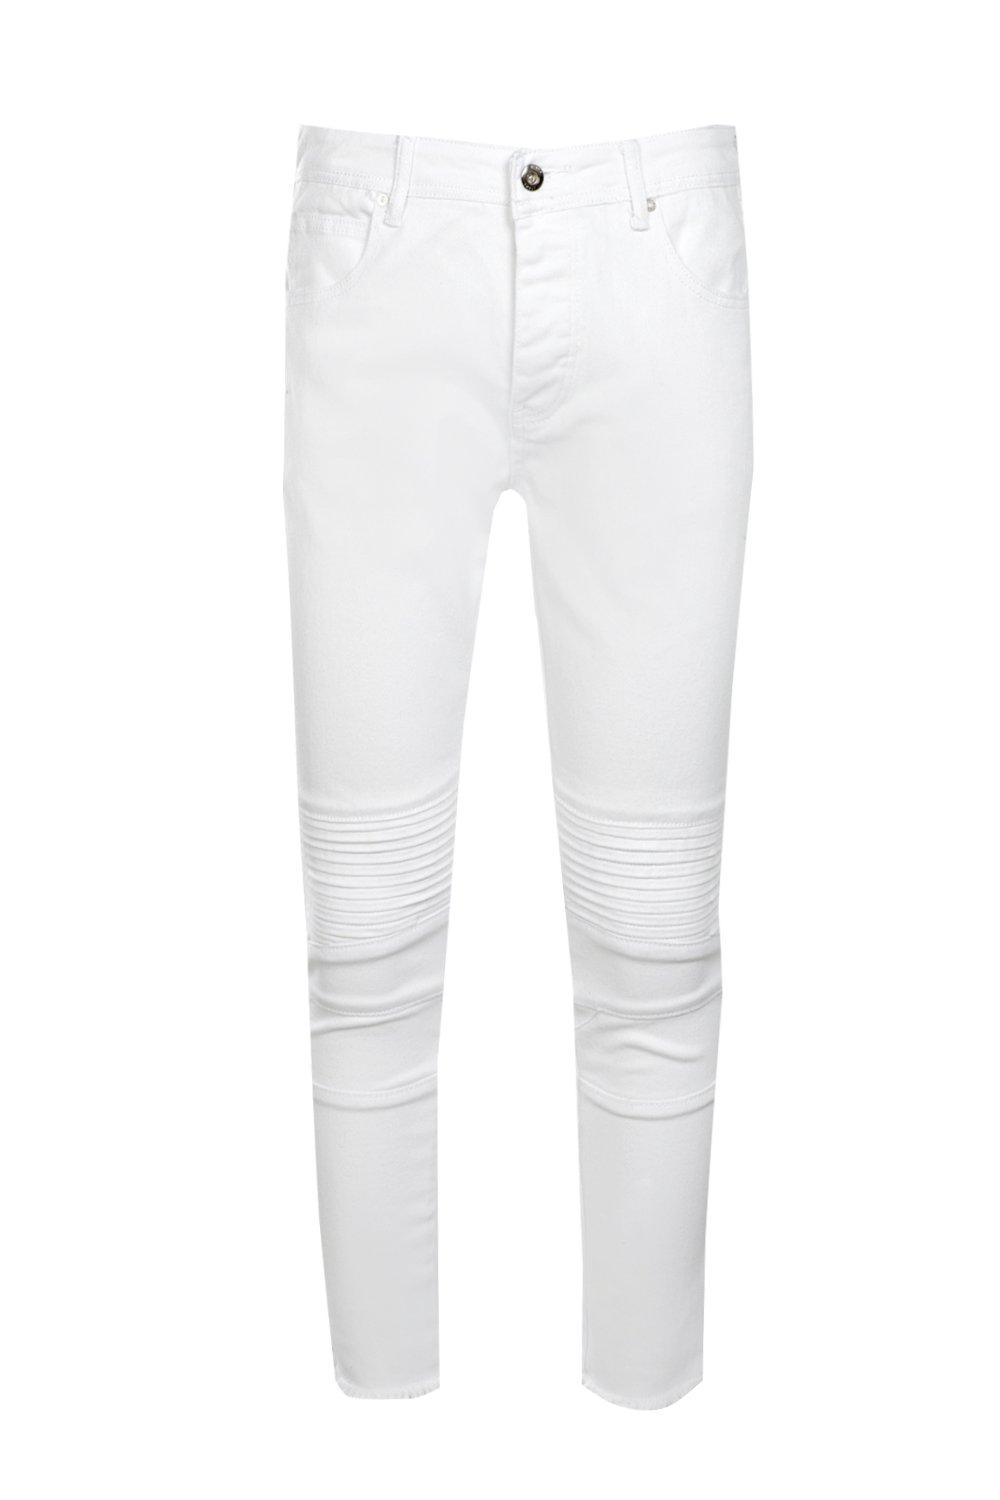 all white biker jeans